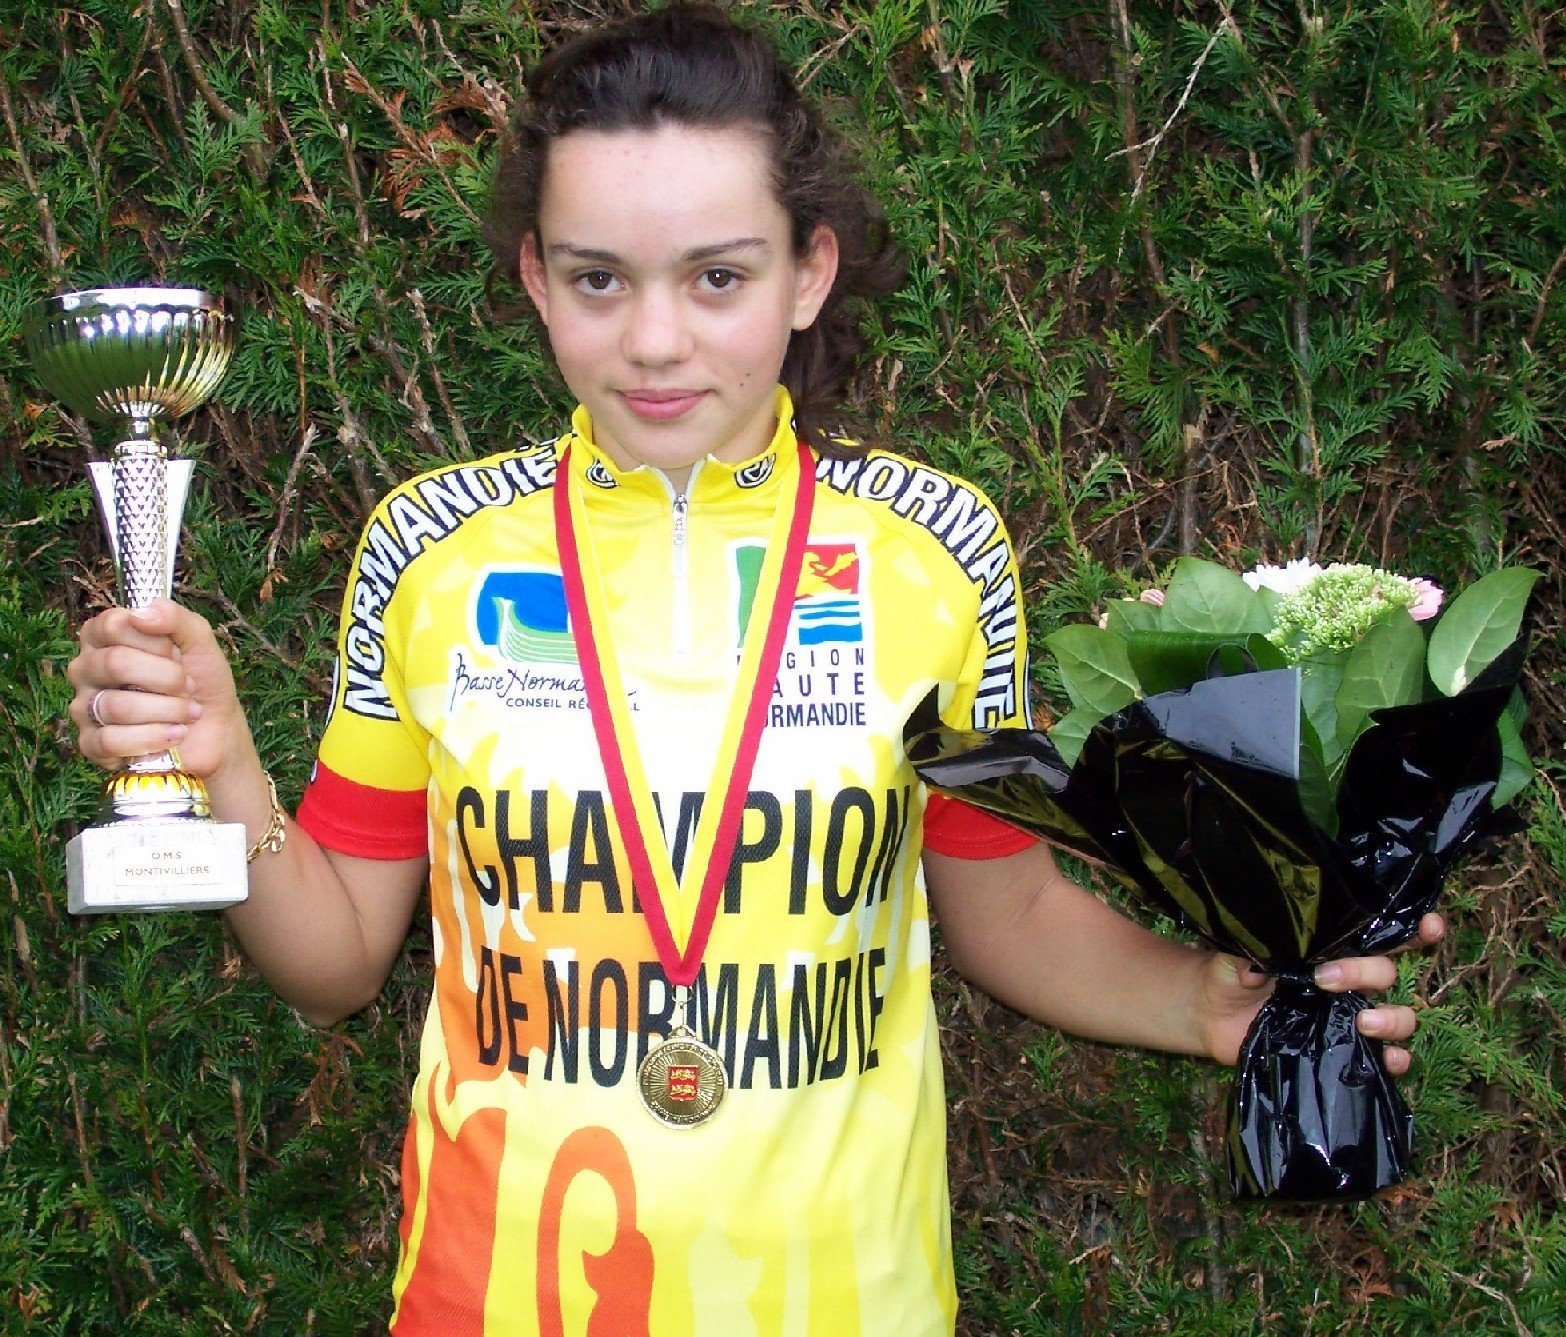 Alina Championne de Normandie